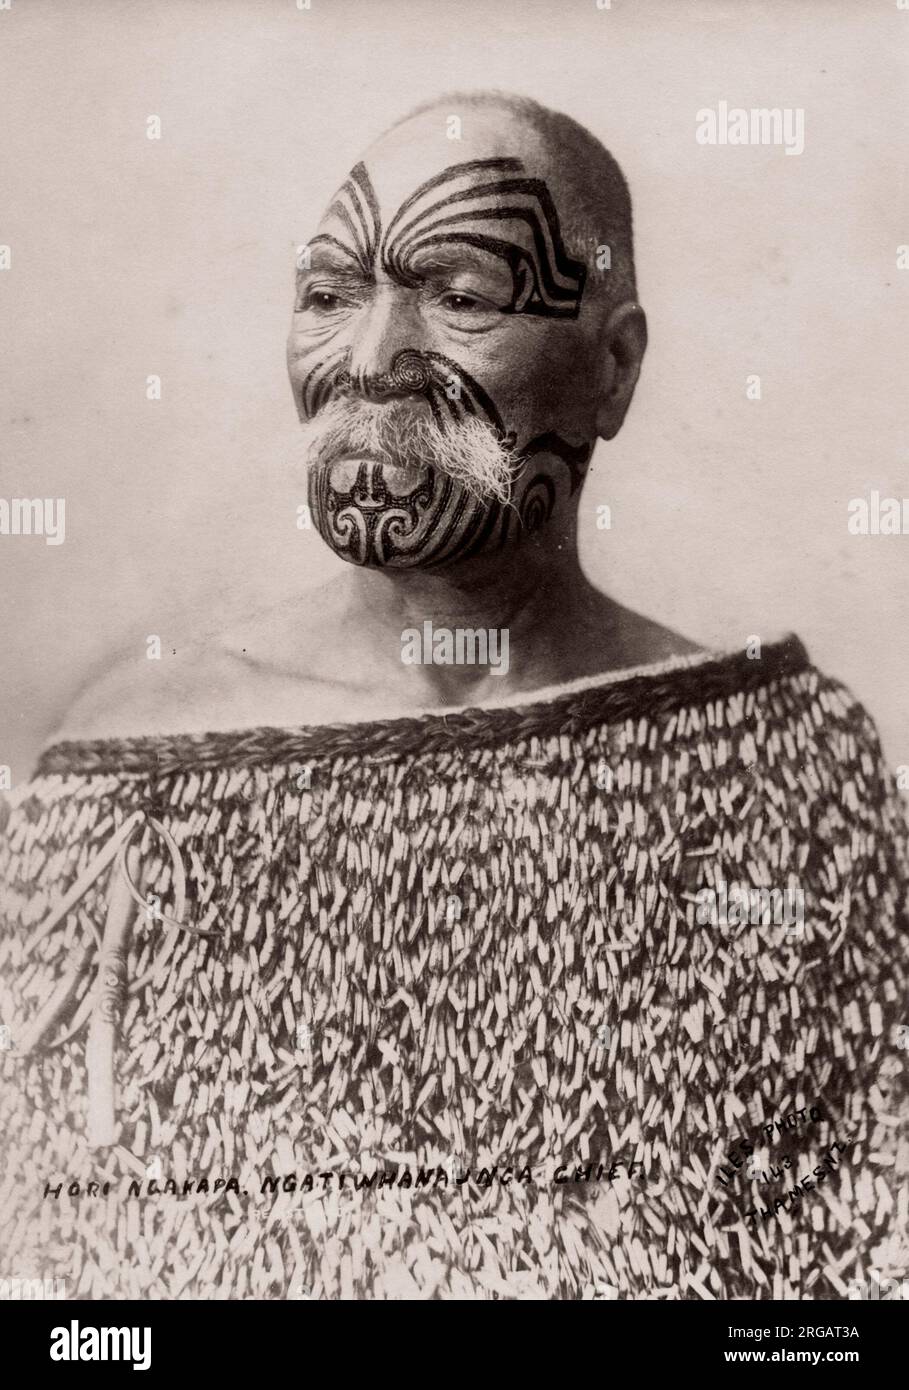 Maori man with facial tattoo, tatttooing, New Zealand, c.1890's Stock Photo